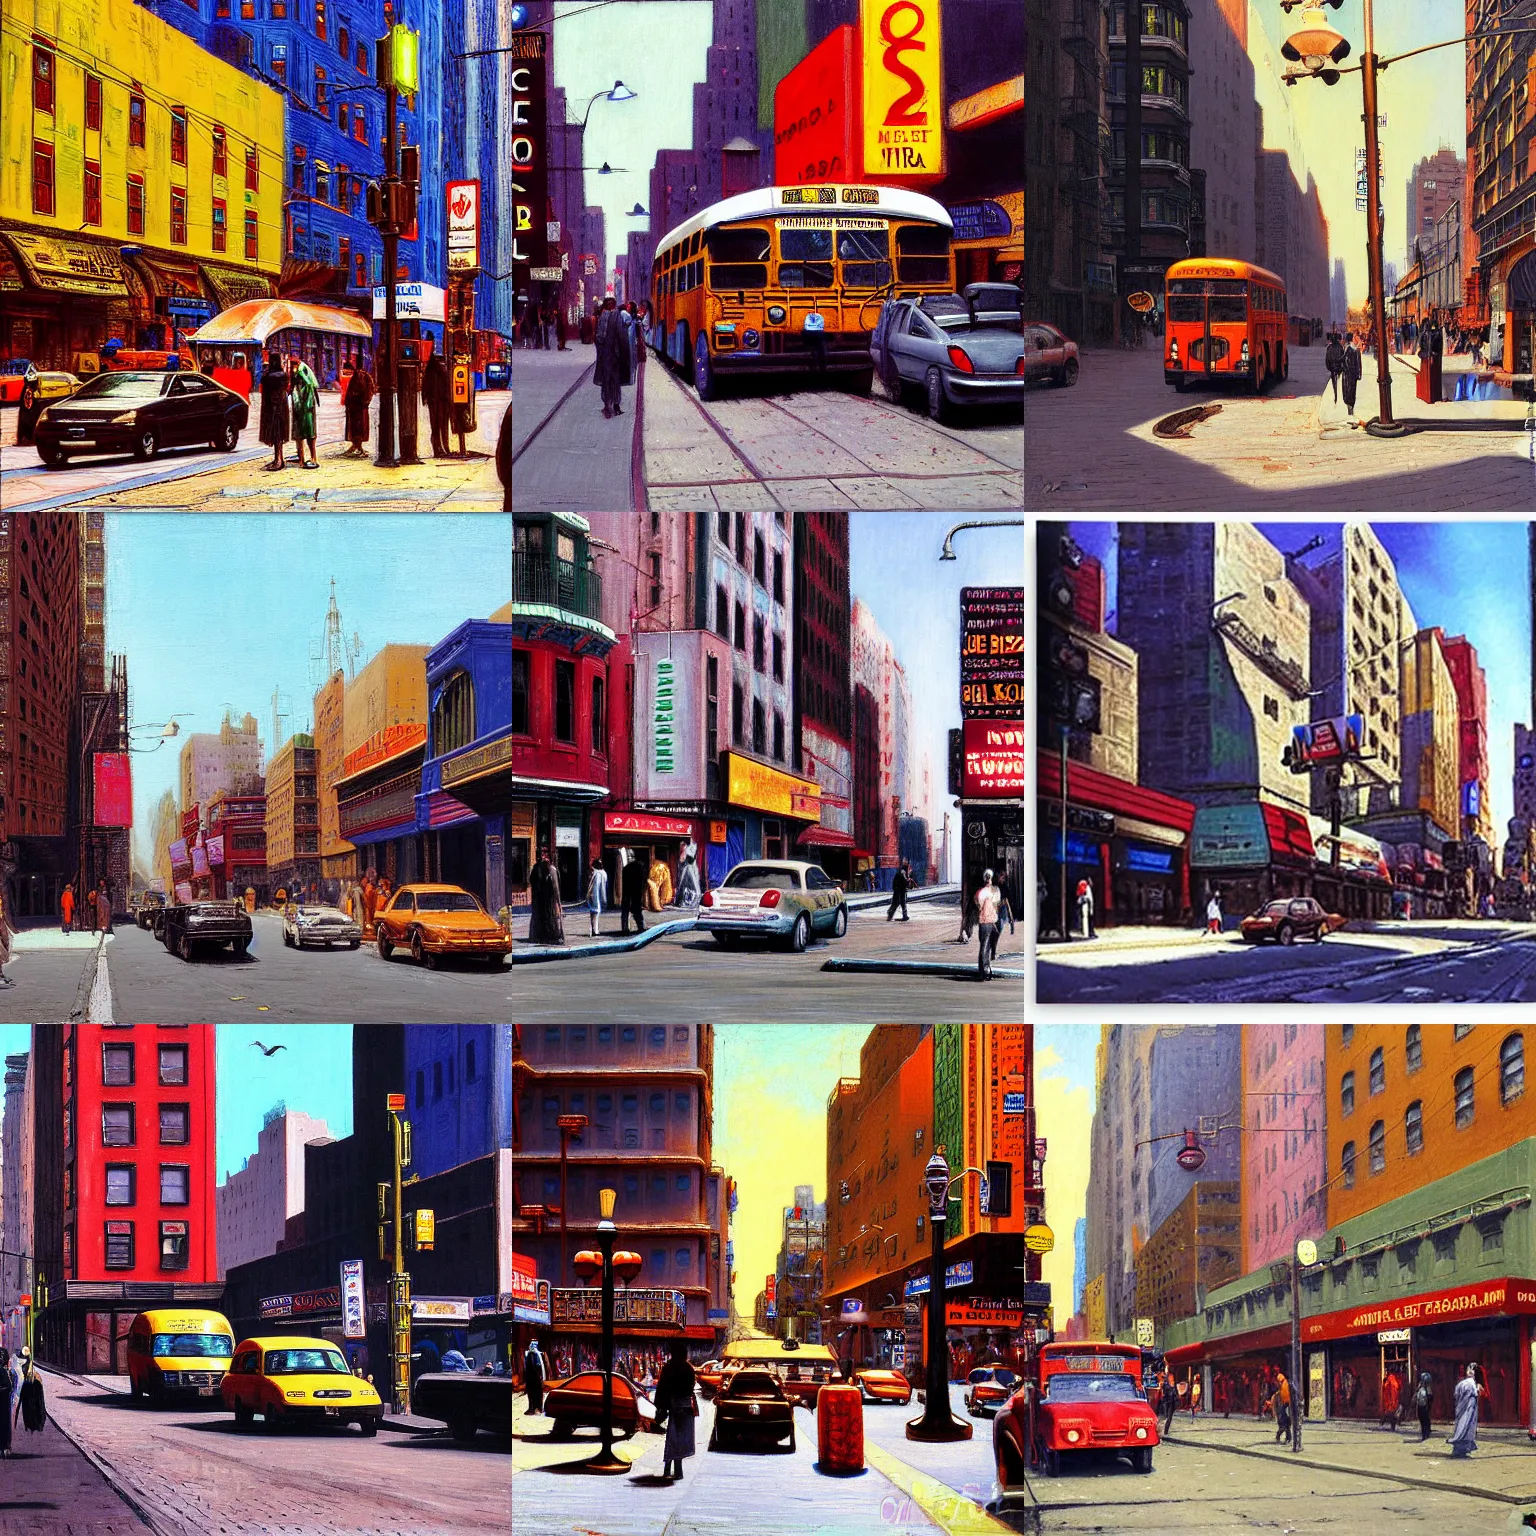 Prompt: 4k, street photography, tangier street in new york city, mta subway entrance, djelleba, public bus, bus stop, tree, car traffic, traffic light, pedestrians, shops, Jean-Leon Gerome